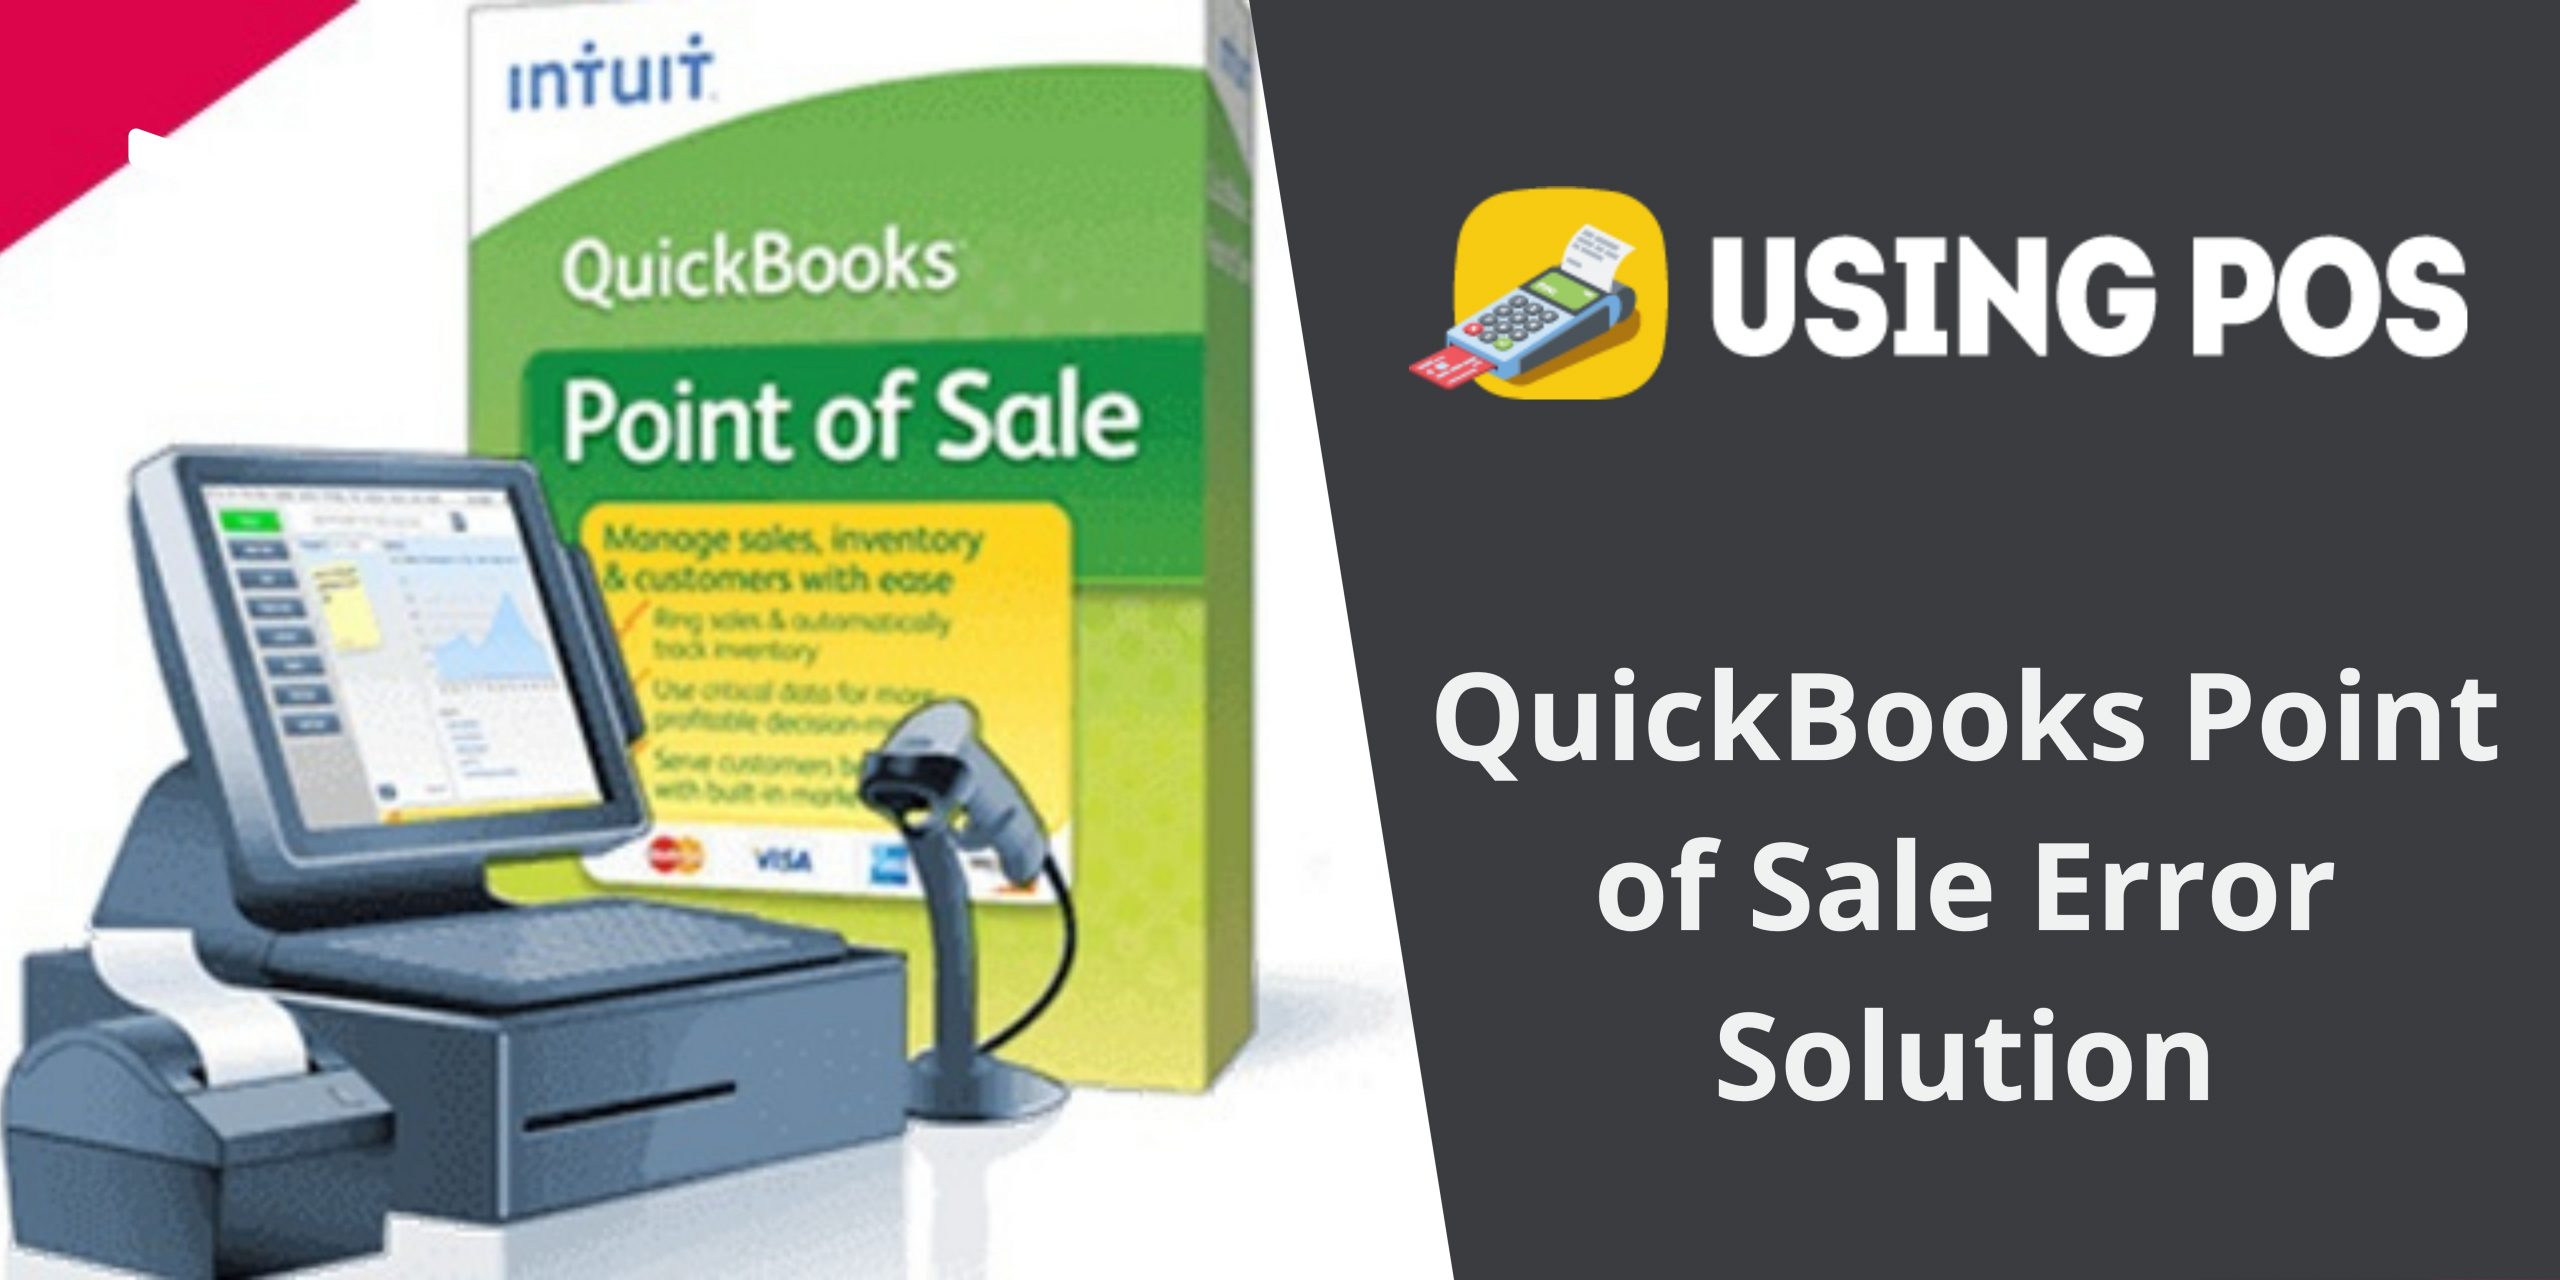 QuickBooks Point of Sale Error Solution